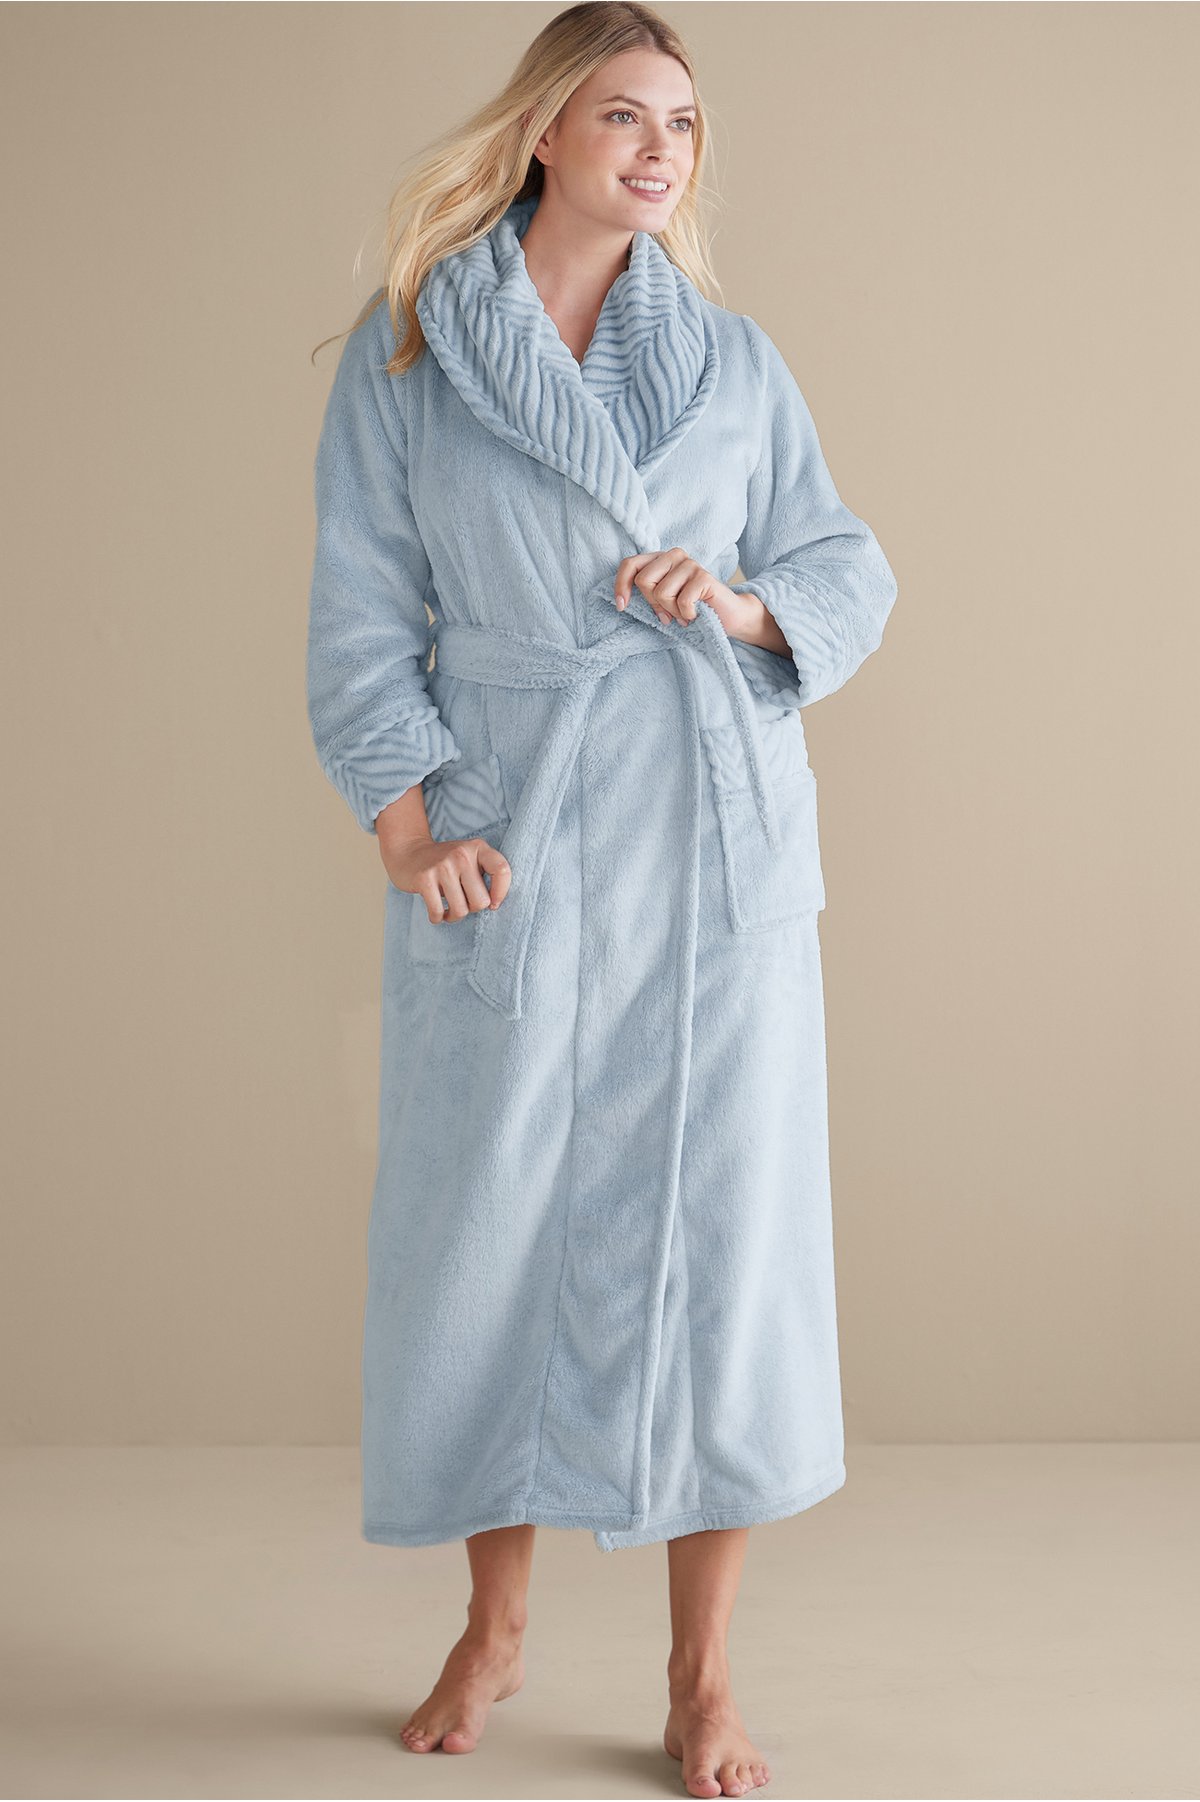 Women's Royal Plush Robe by Soft Surroundings, in Blue Fog size M (10-12)